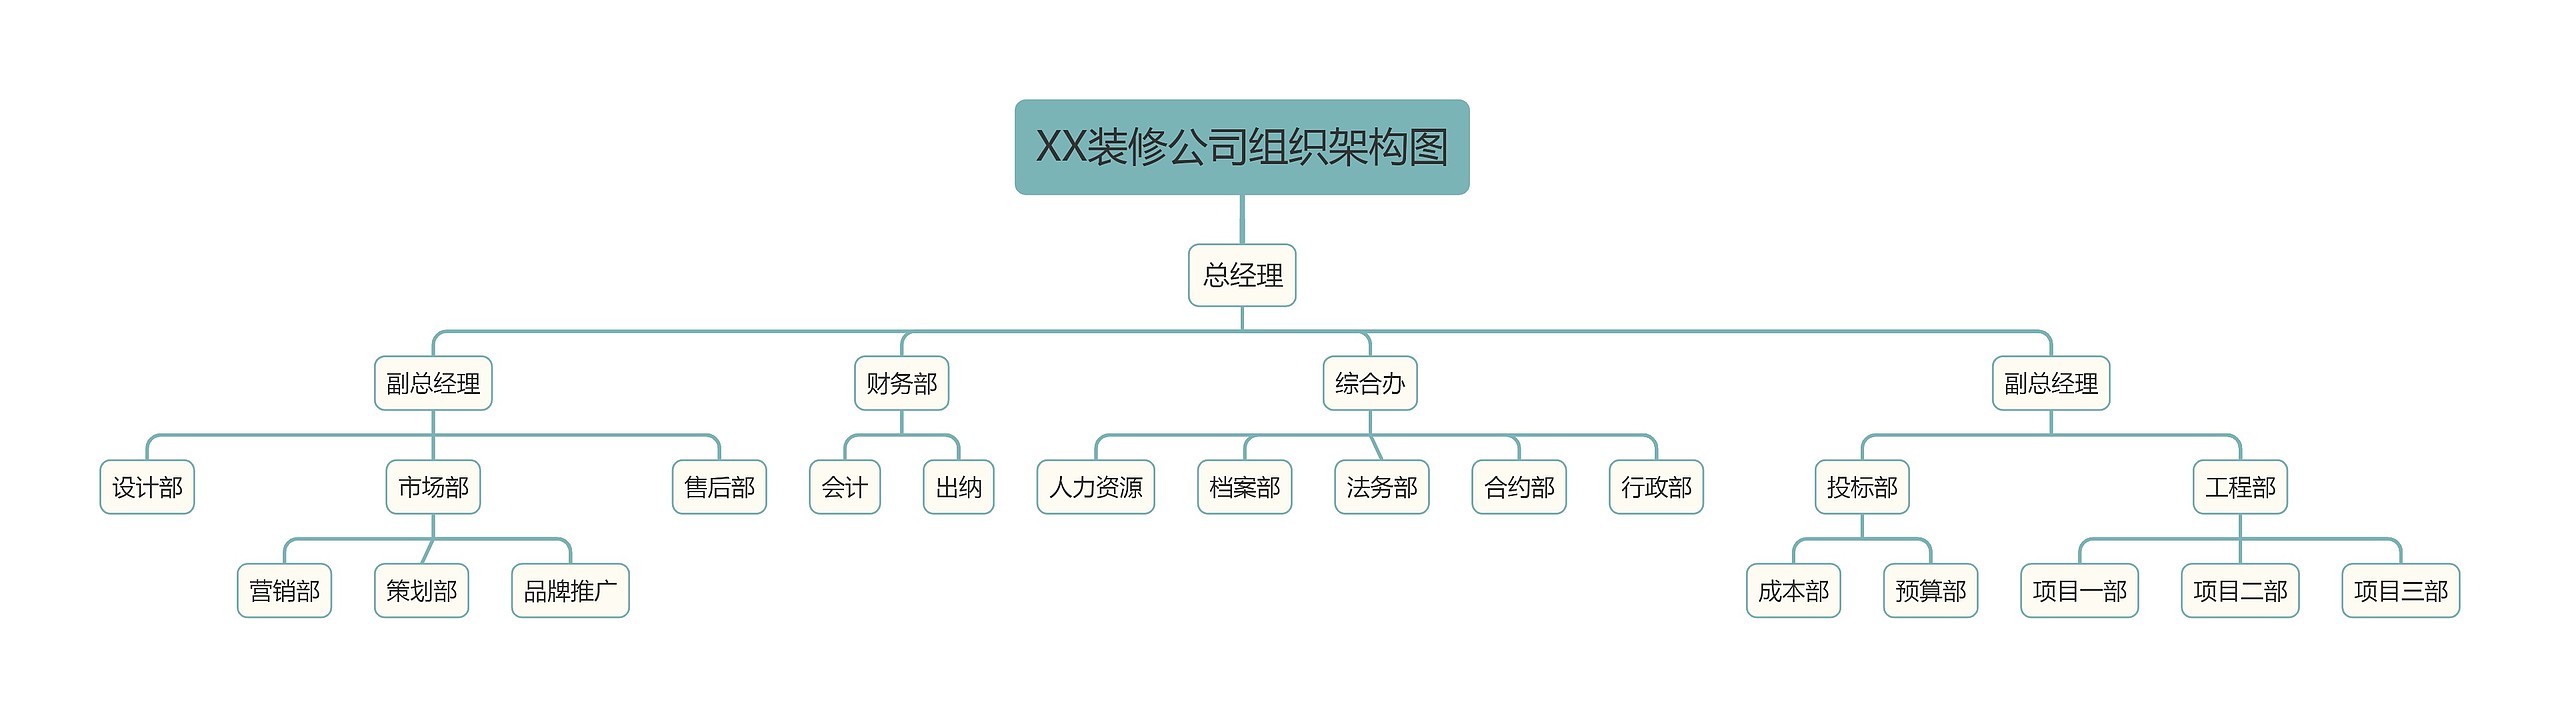 XX装修公司组织架构图